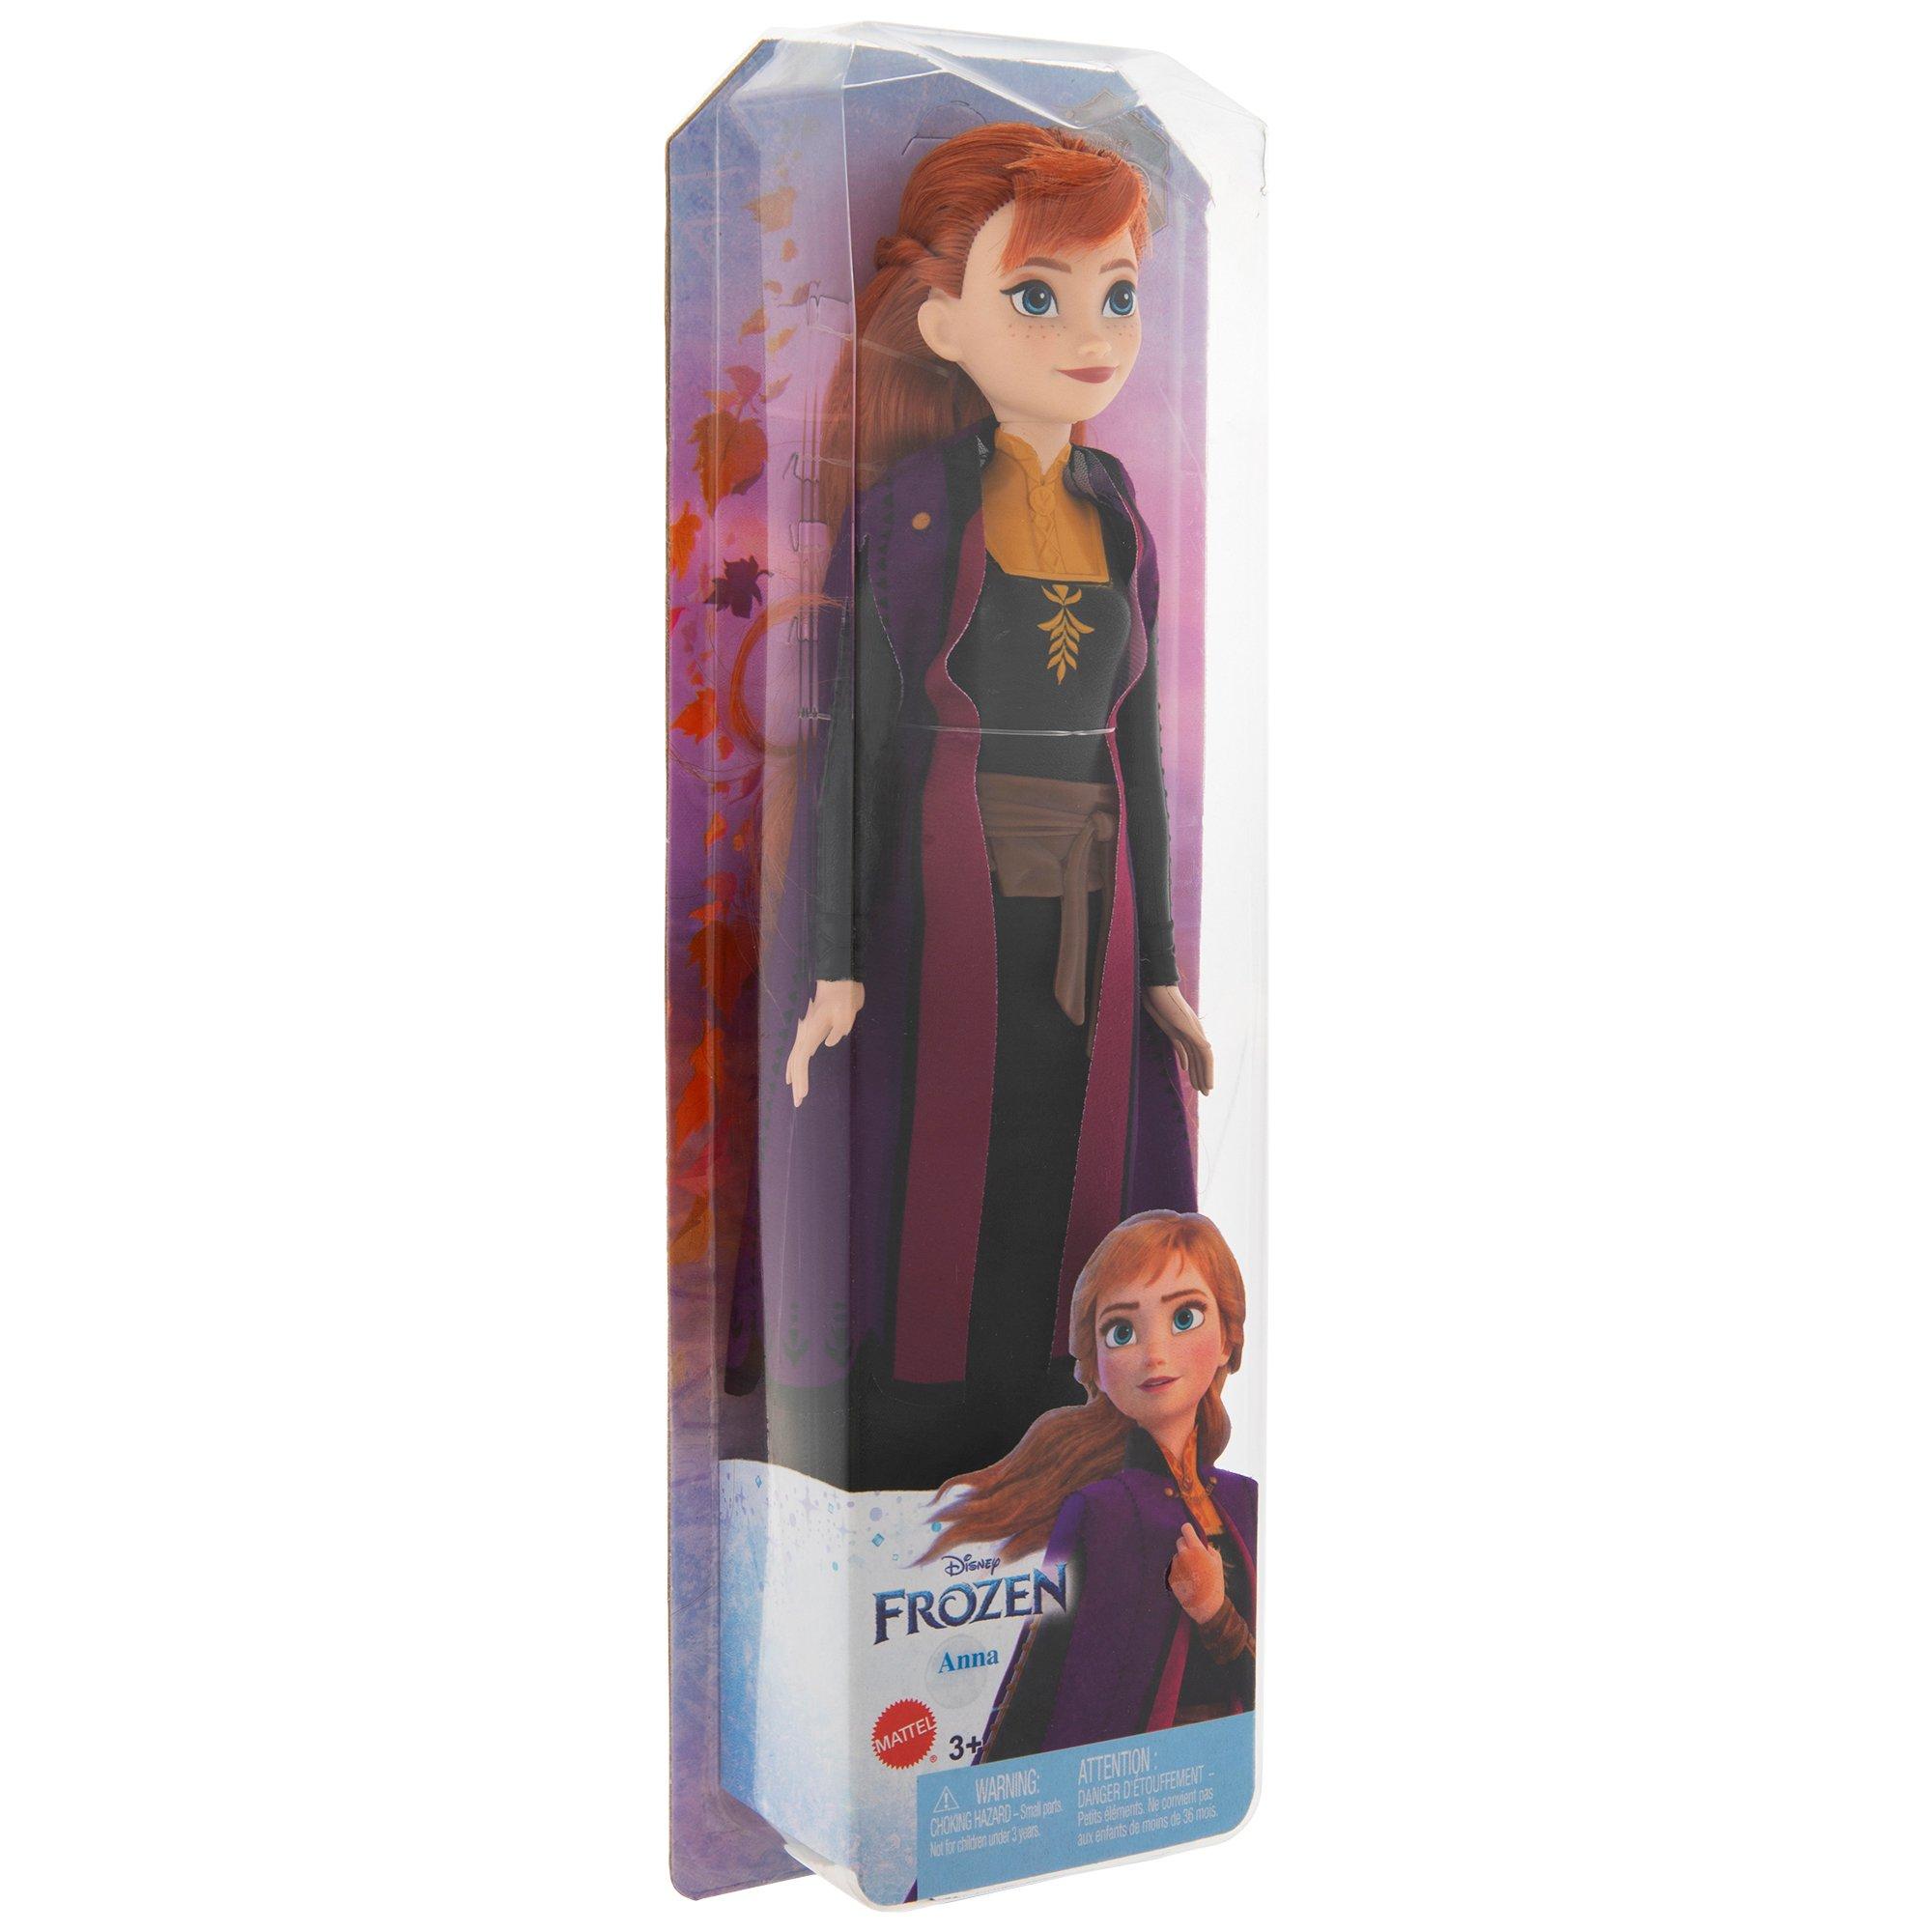 Frozen 2 Sparkling Paper Dolls Kit, Hobby Lobby